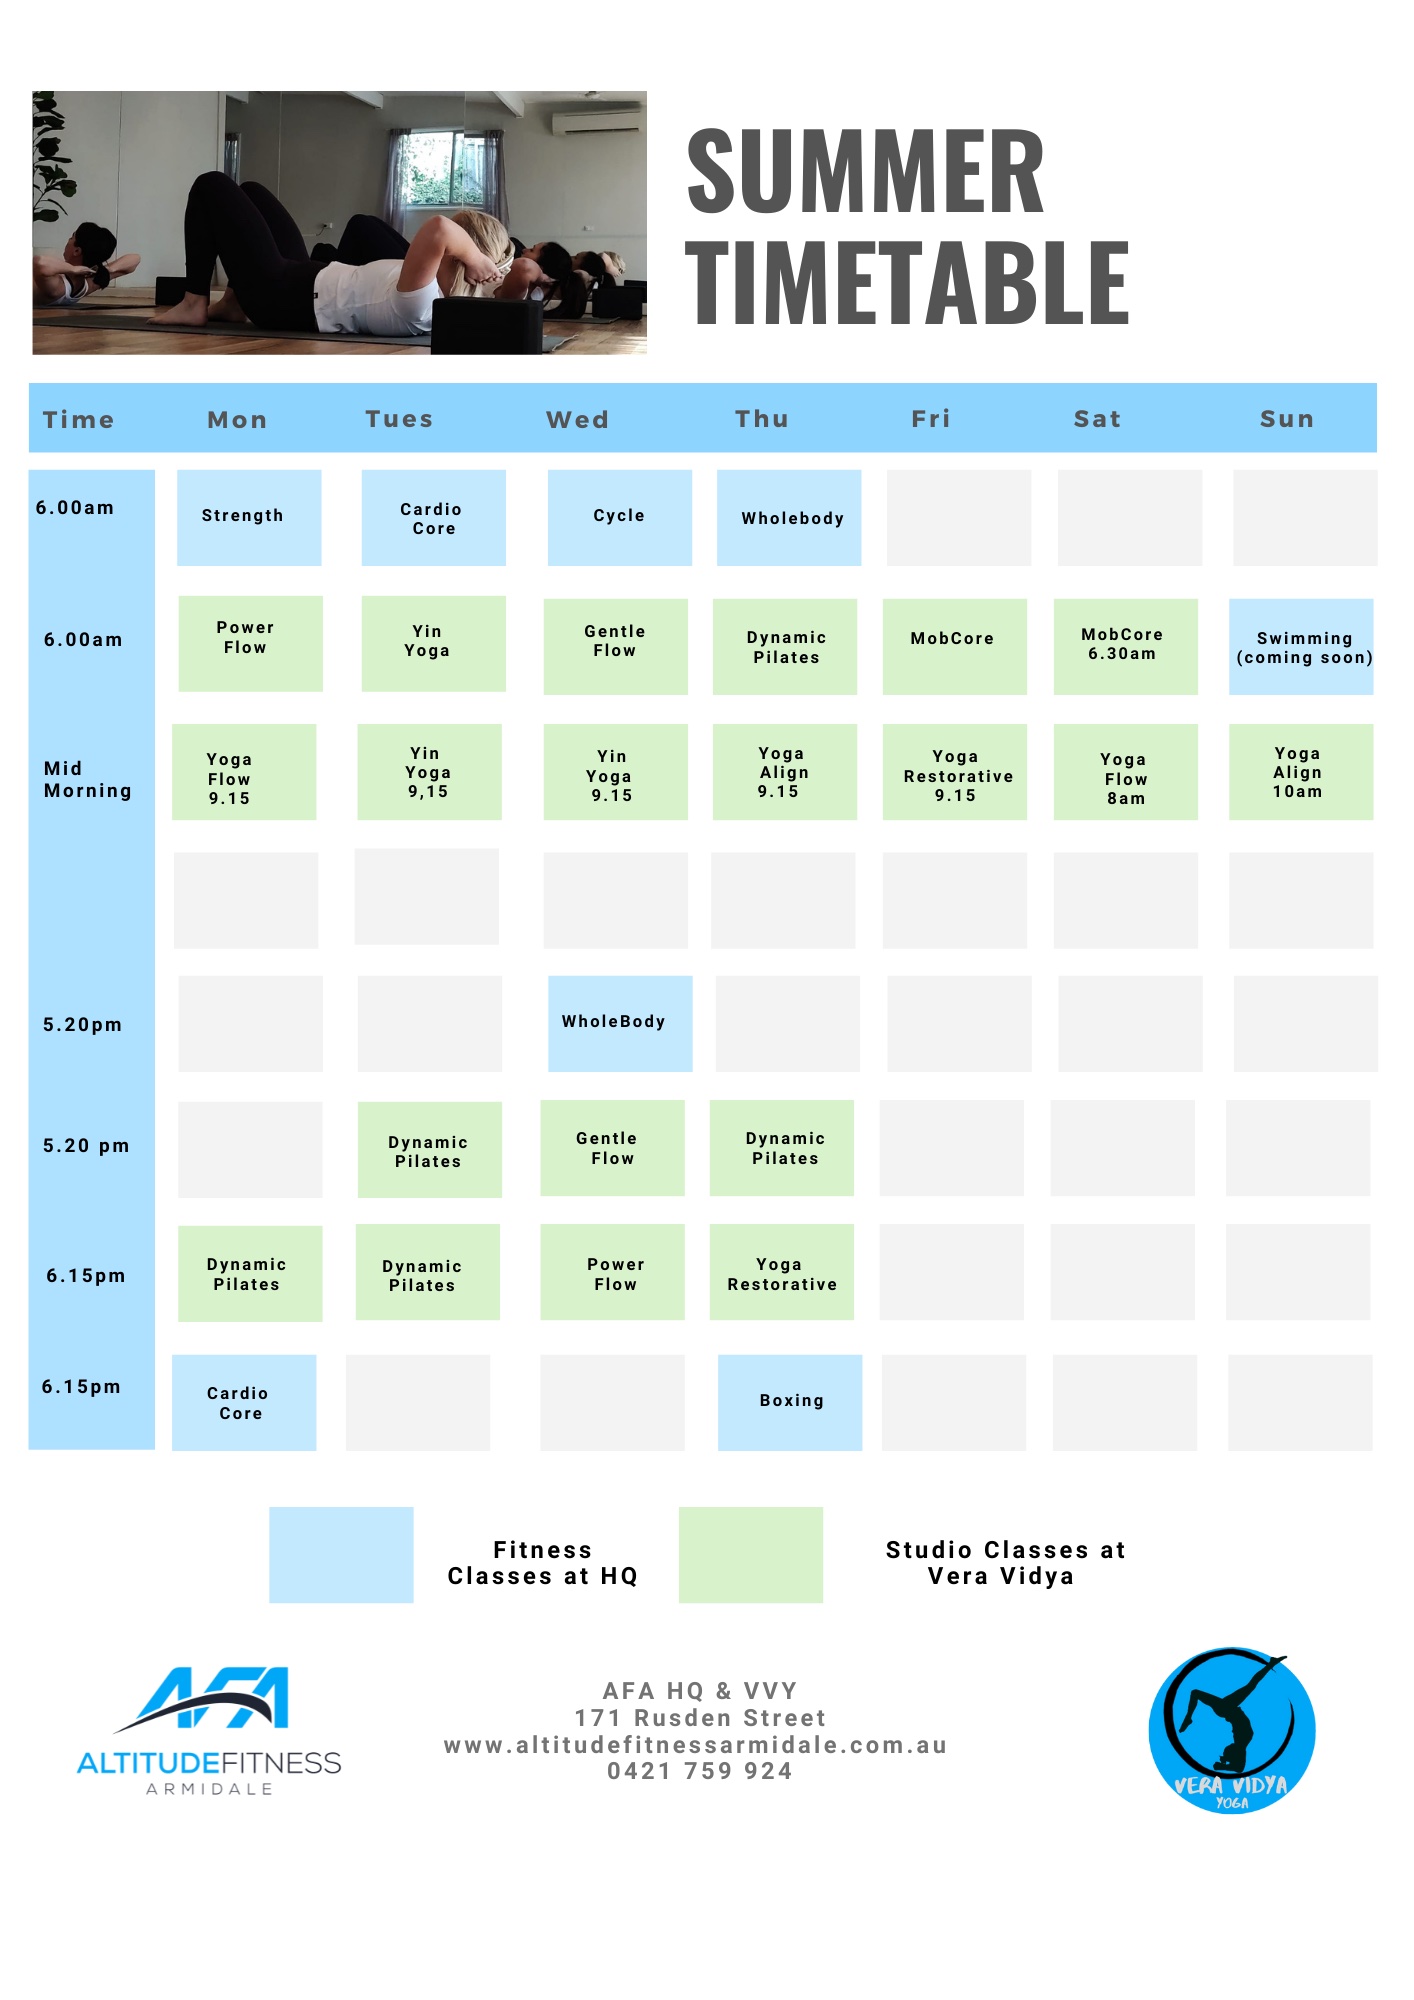 Return AFA timetable